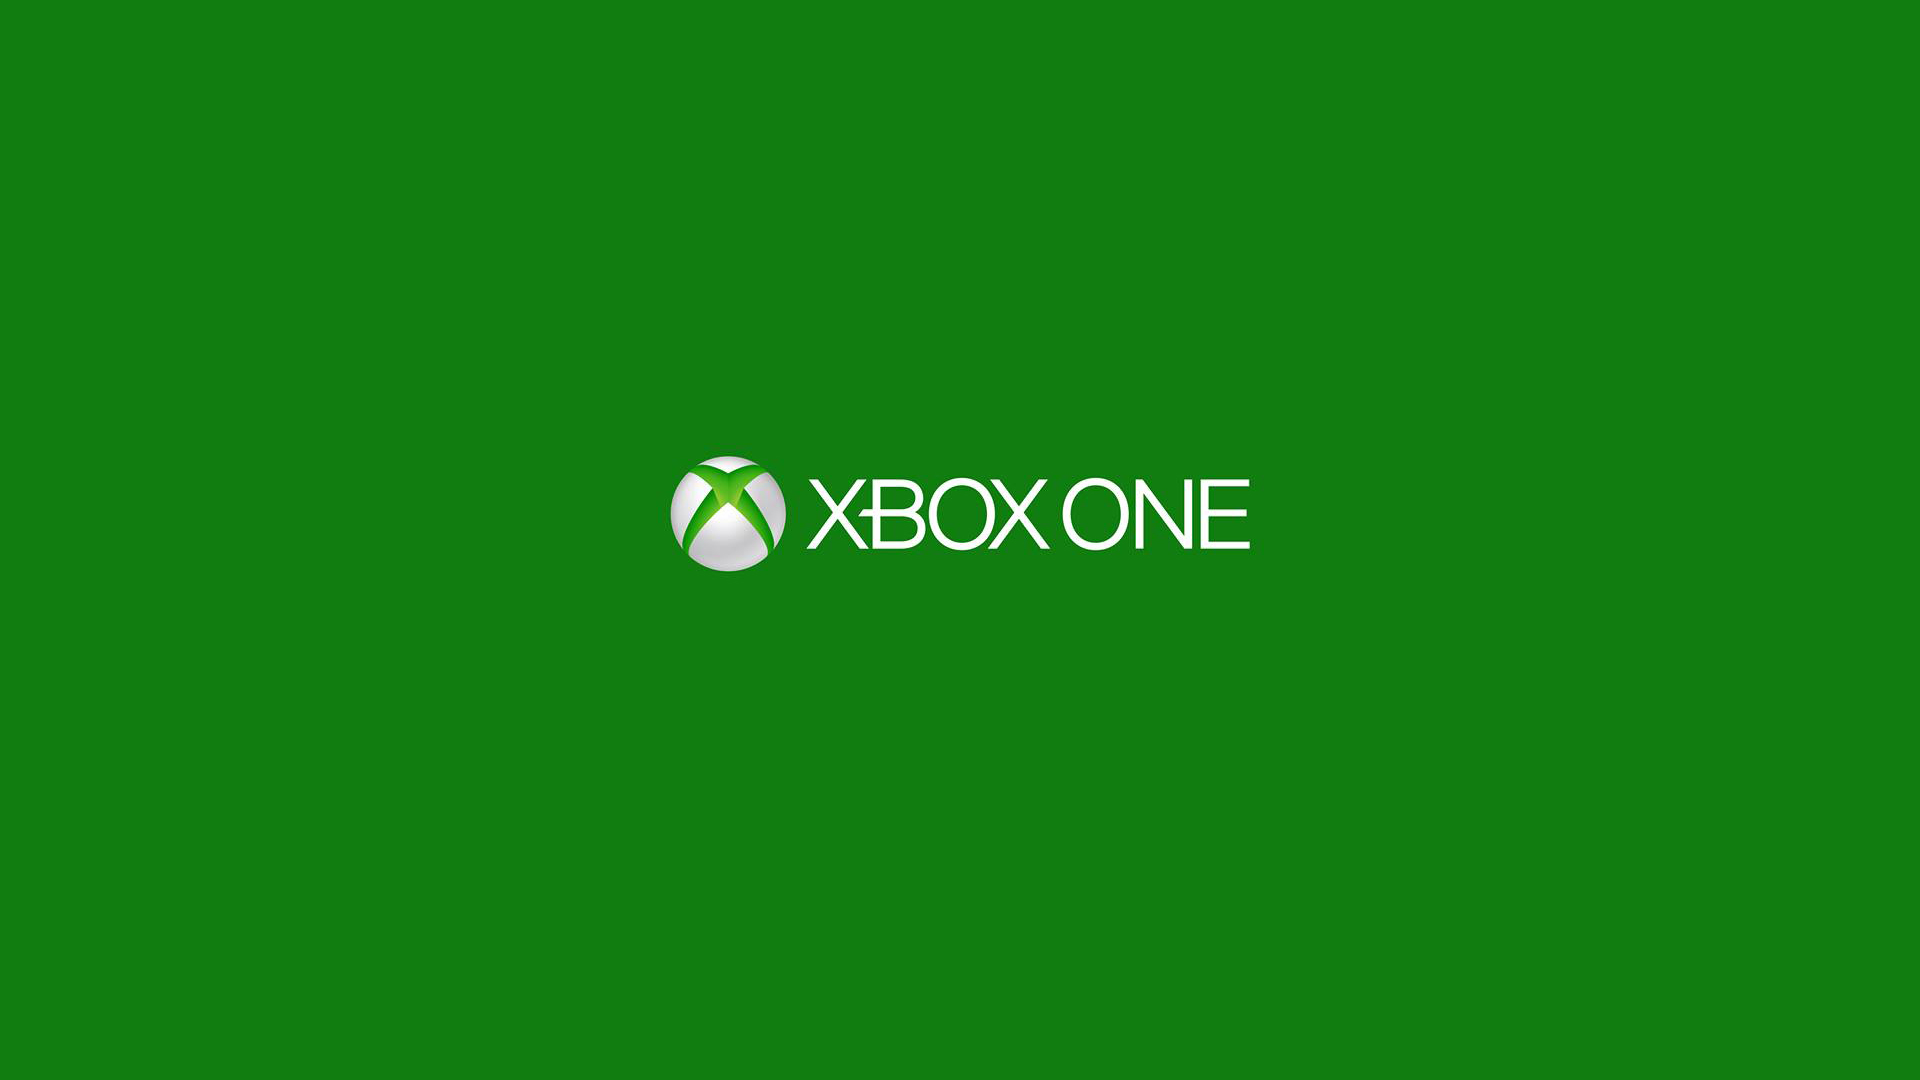 Xbox One News Images TheCelebrityPix